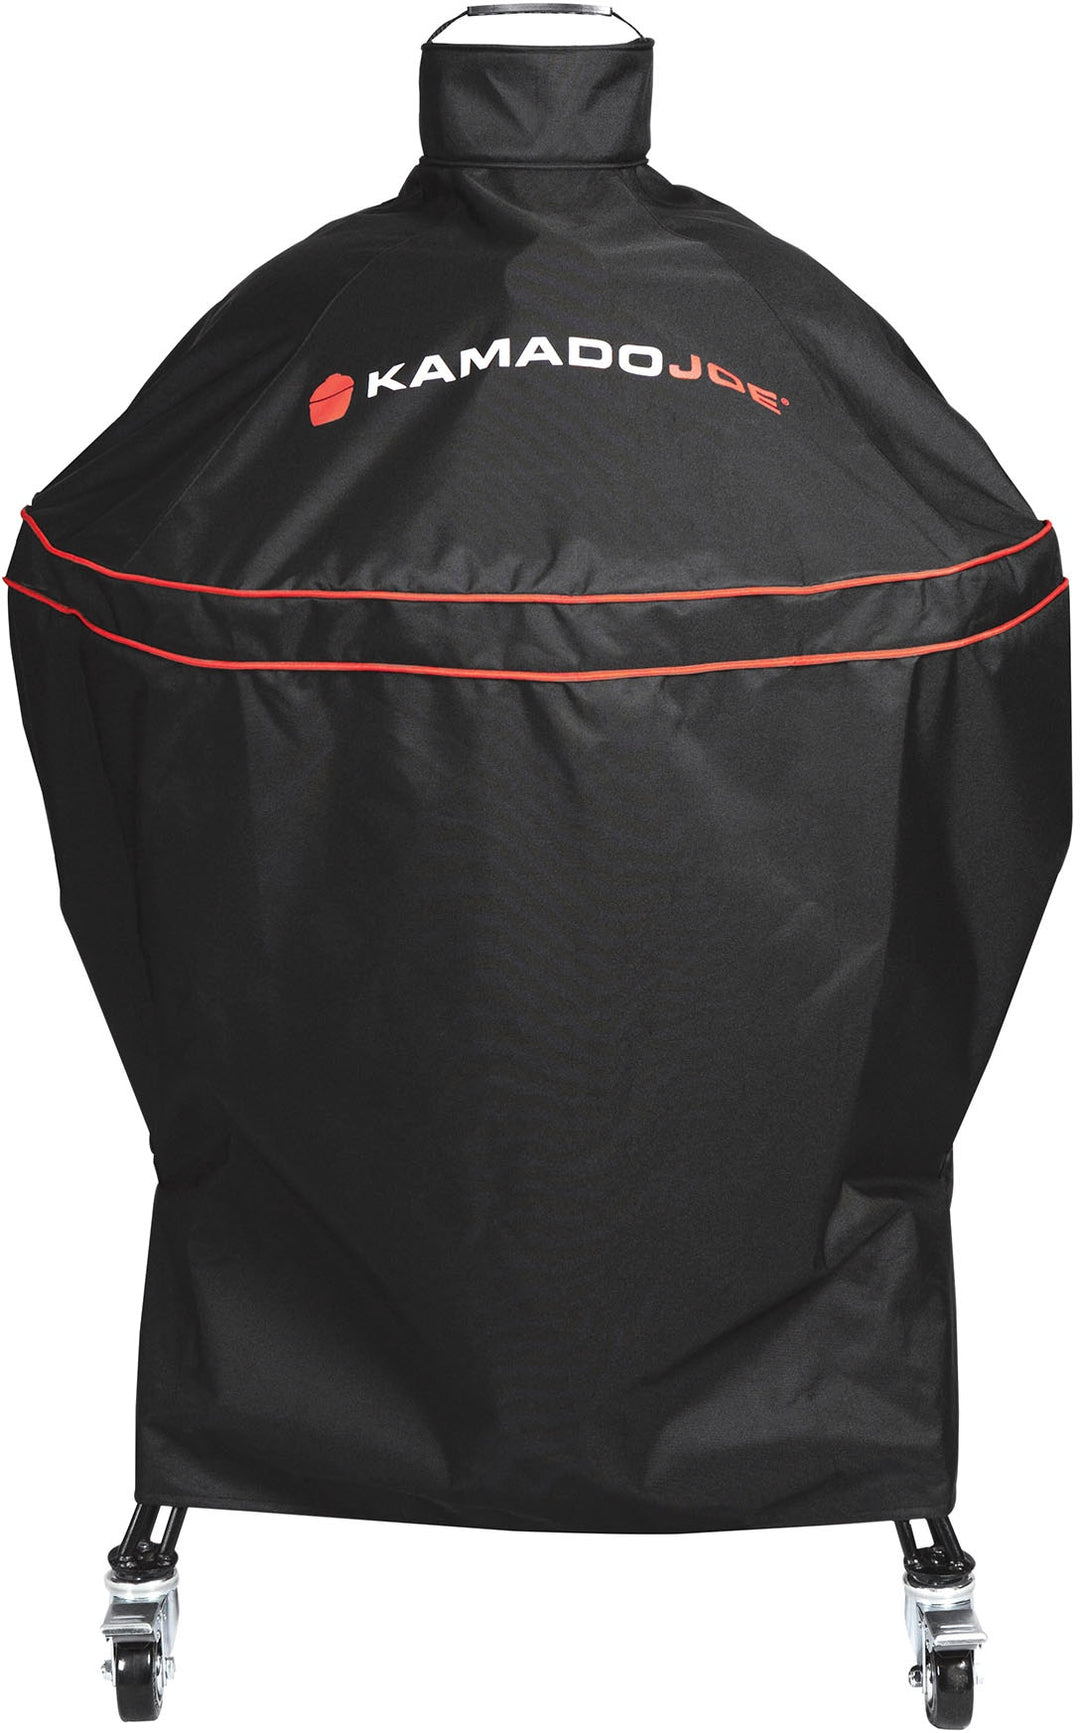 Kamado Joe full length grill cover for Big Joe models on a cart. - Black_0